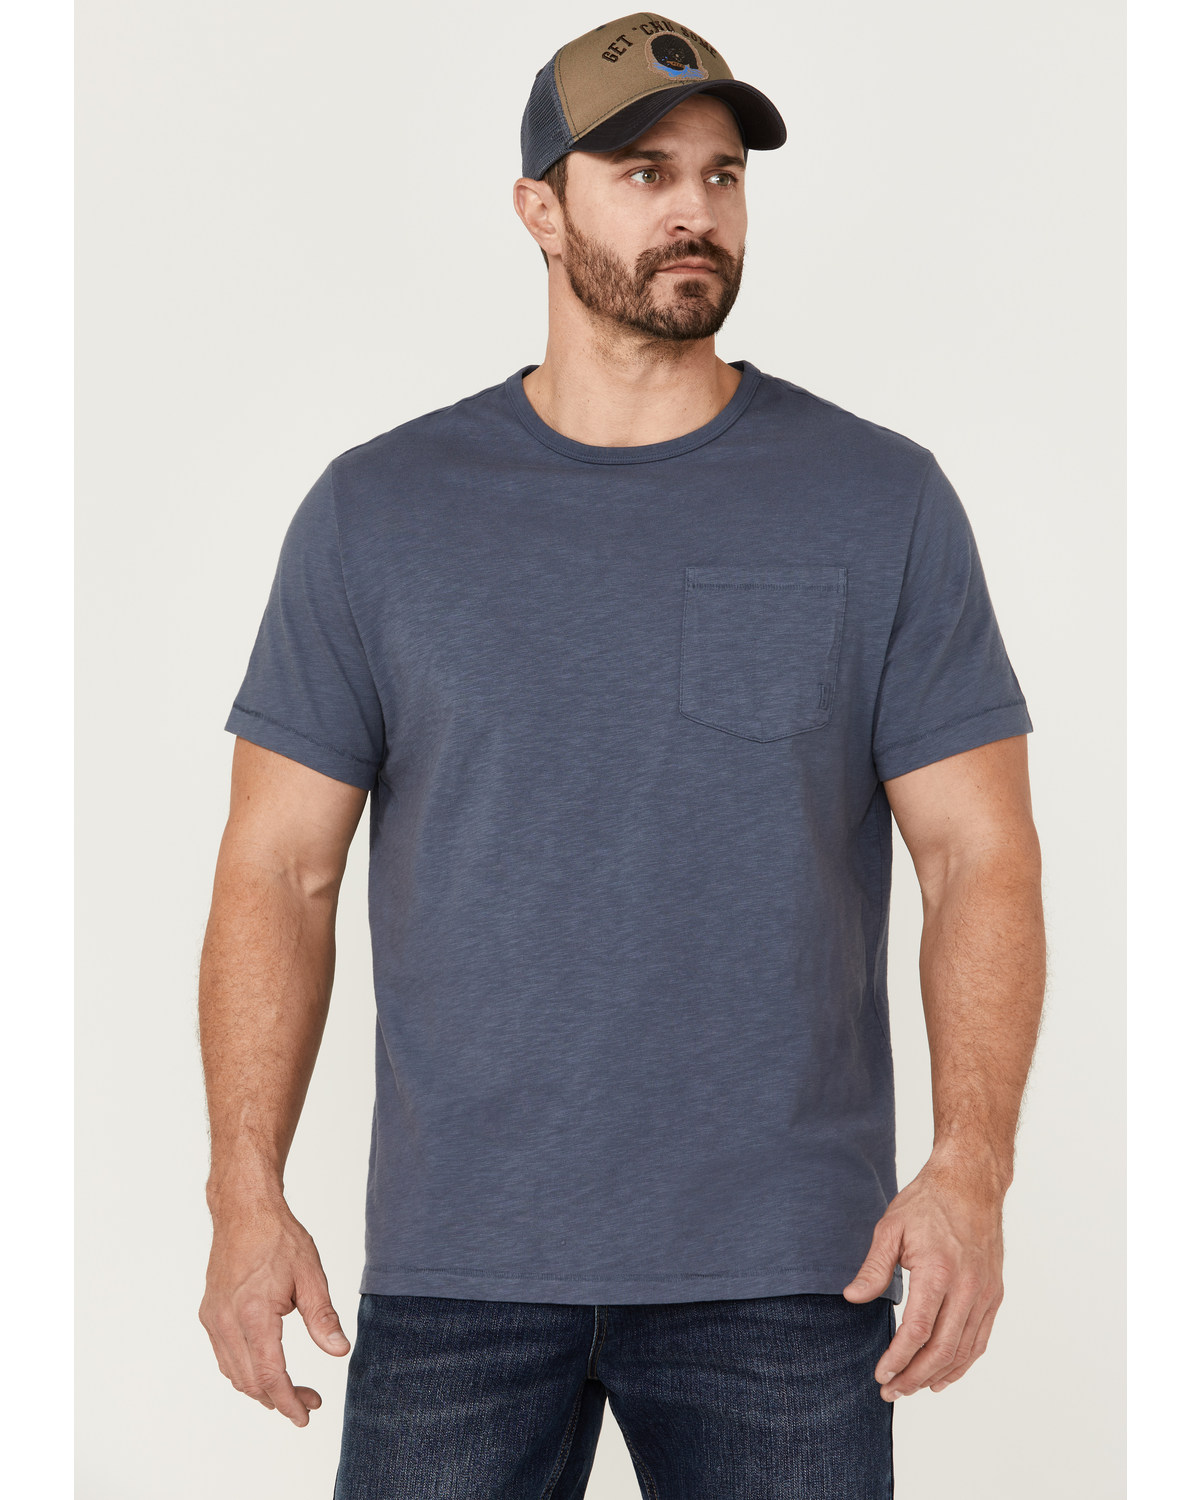 Brothers and Sons Men's Indigo Basic Short Sleeve Pocket T-Shirt